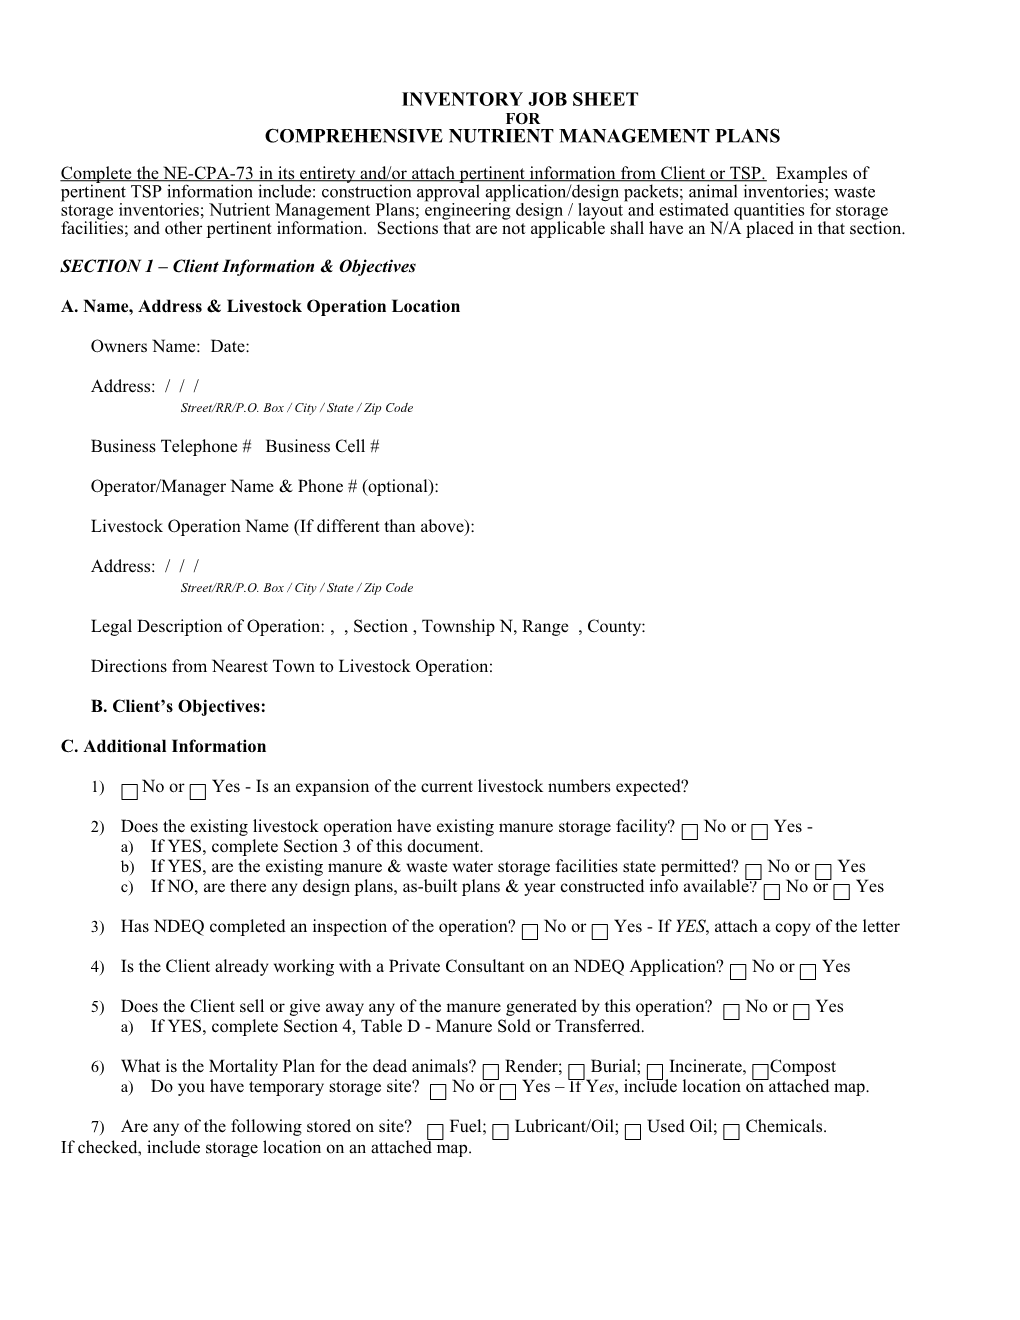 NE-CPA-73 Inventory Job Sheet for Comprehensive Nutrient Management Plans